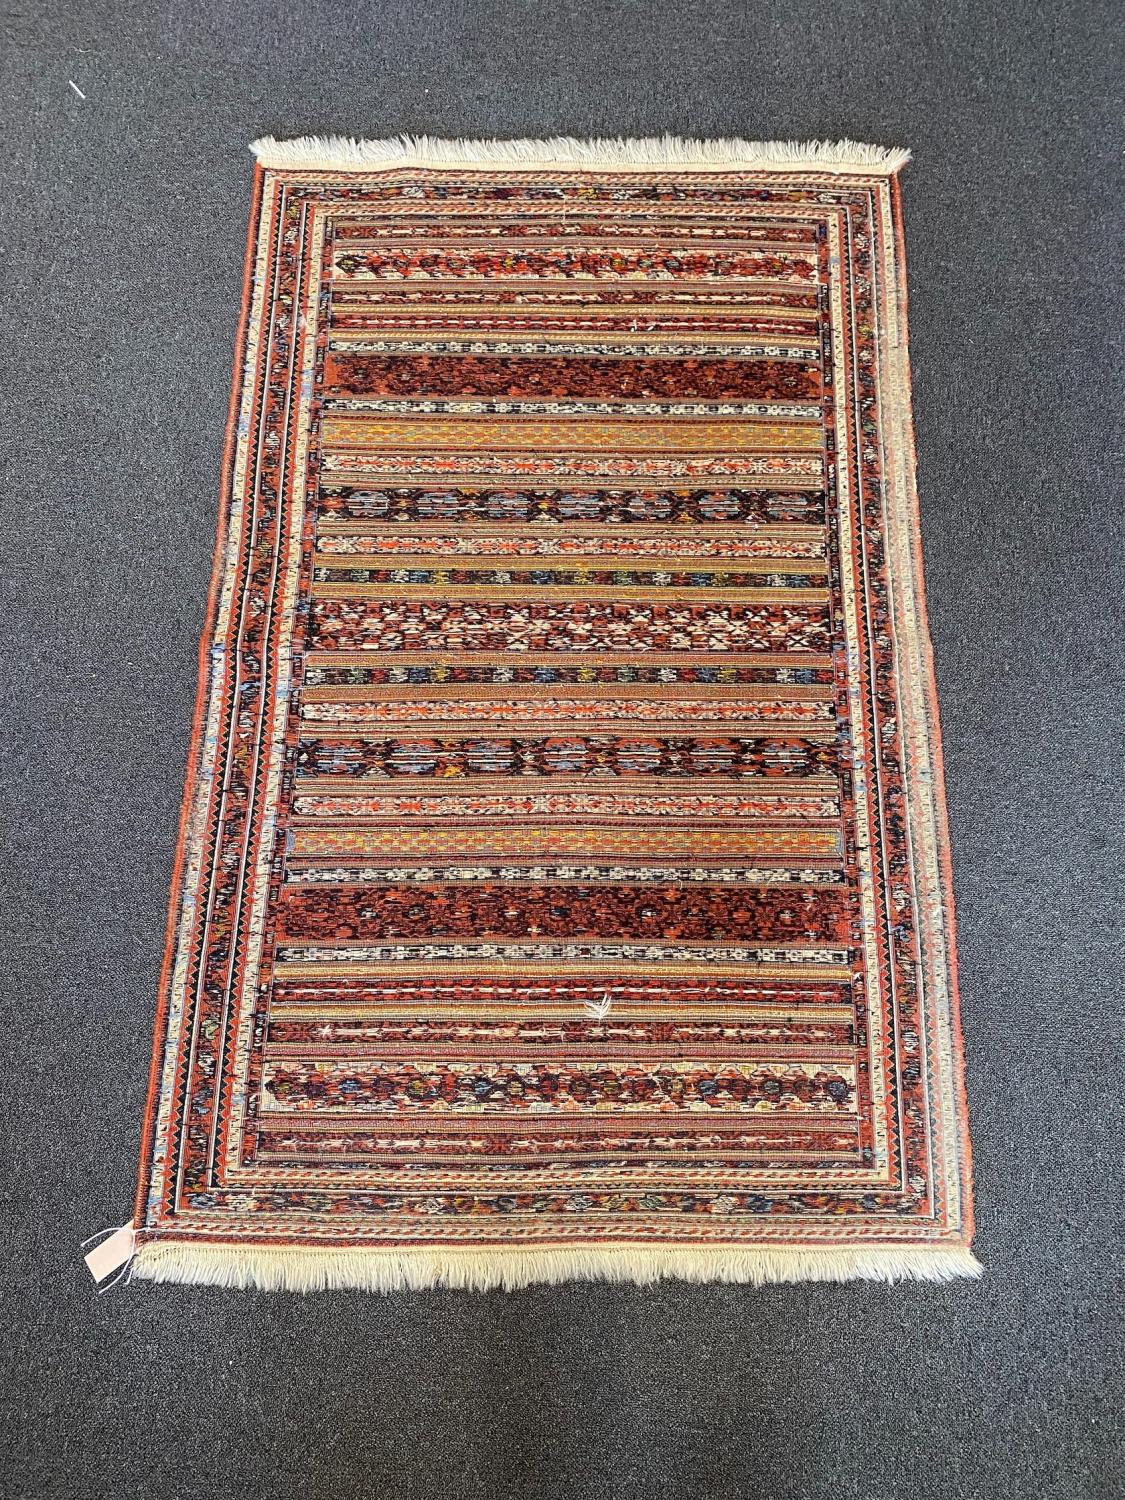 A fine Sumac flatweave polychrome rug 160 x 100 cms - Image 5 of 7